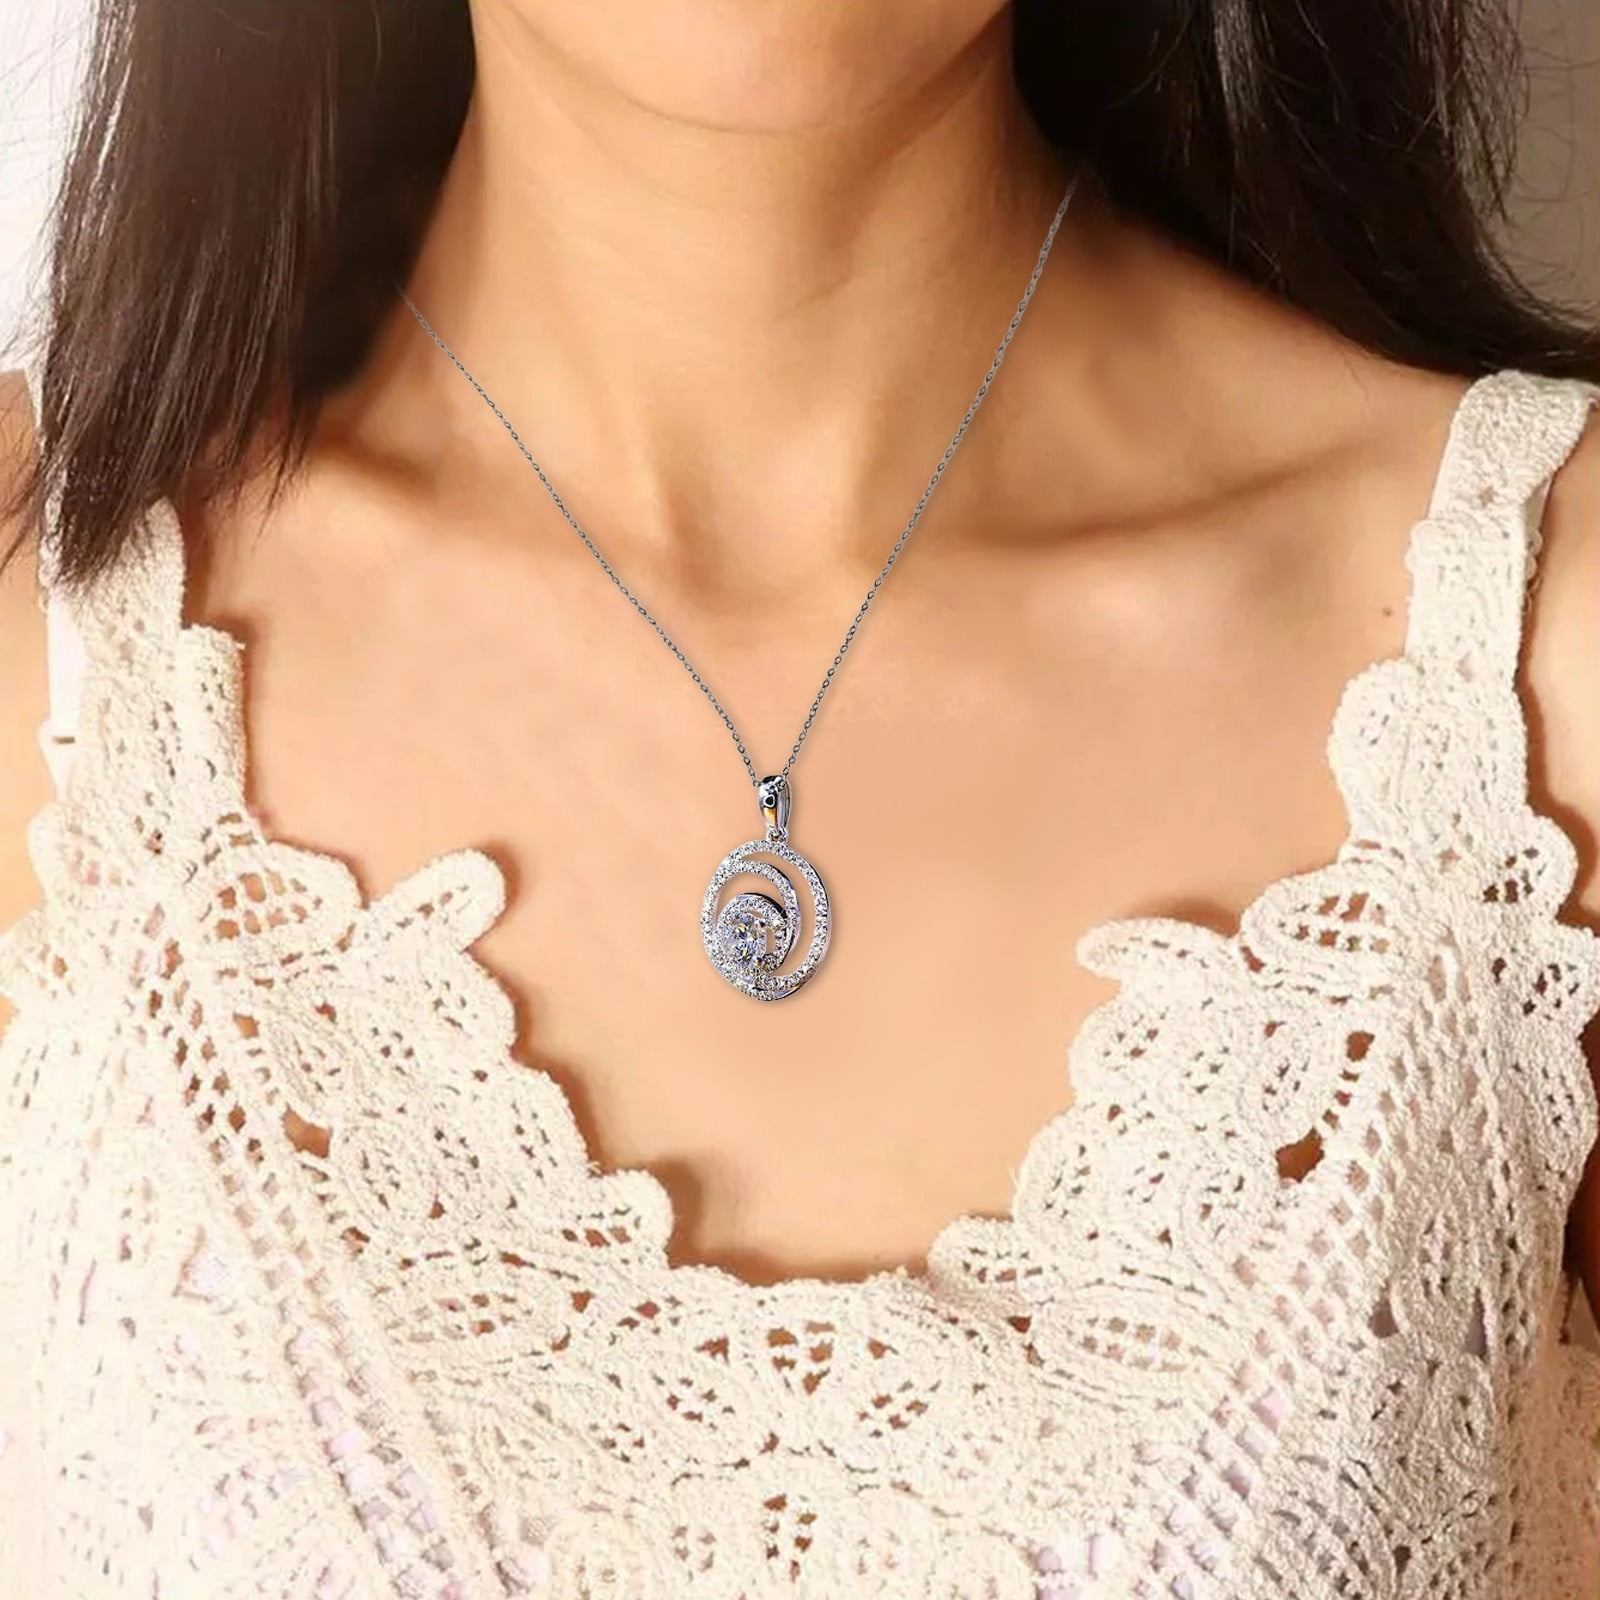 LASHALL GIFT Rhinestone Necklace Neck Chain Jewelry Temperament